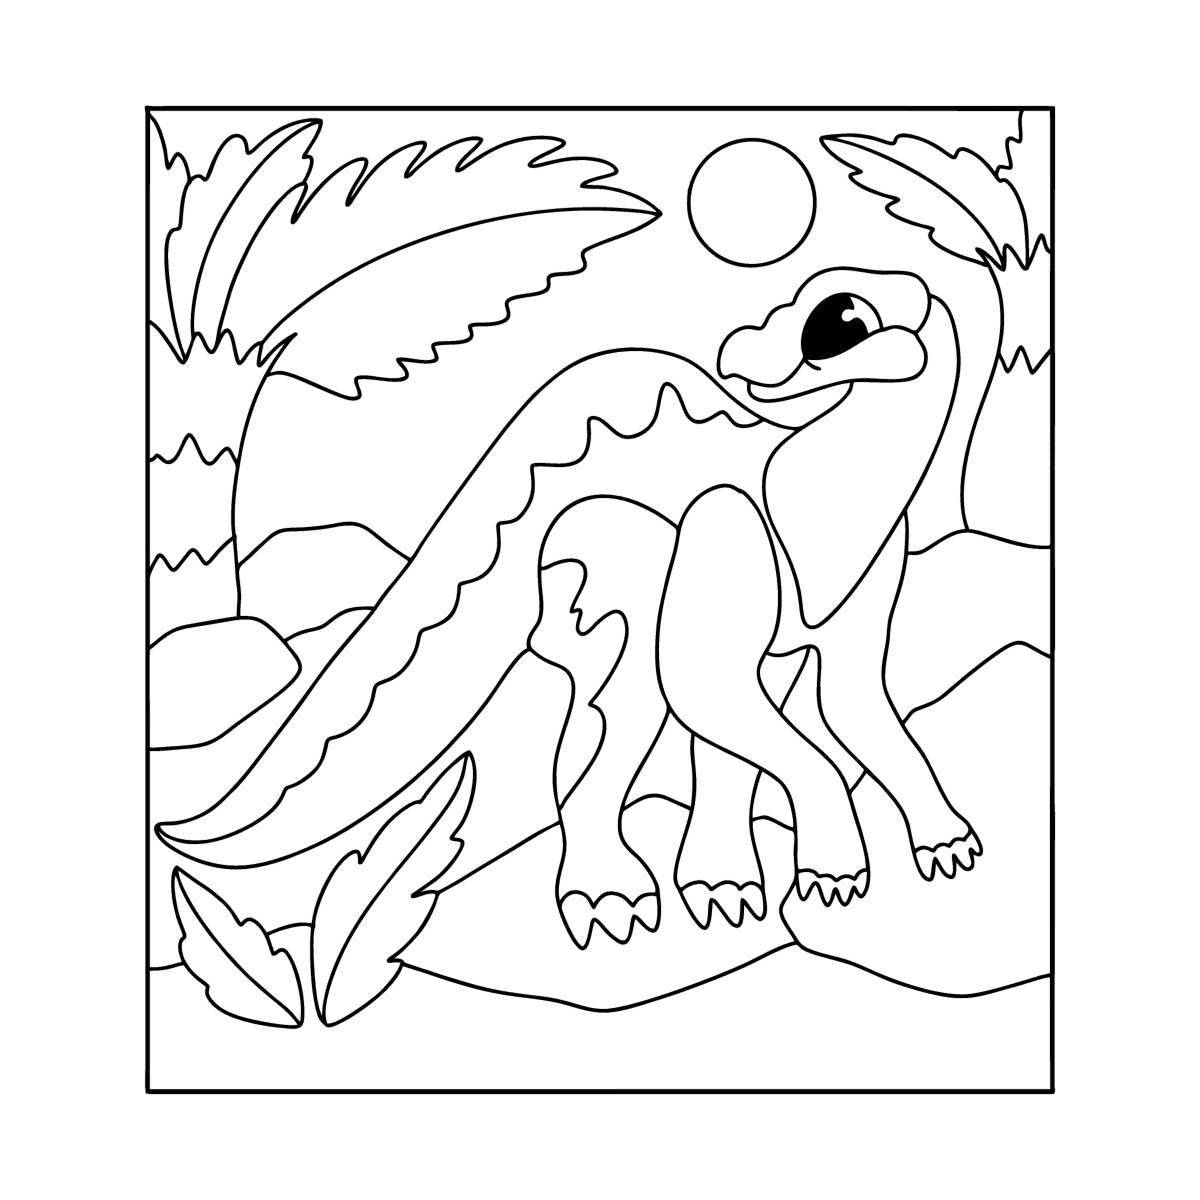 Iguanodon humorous coloring book